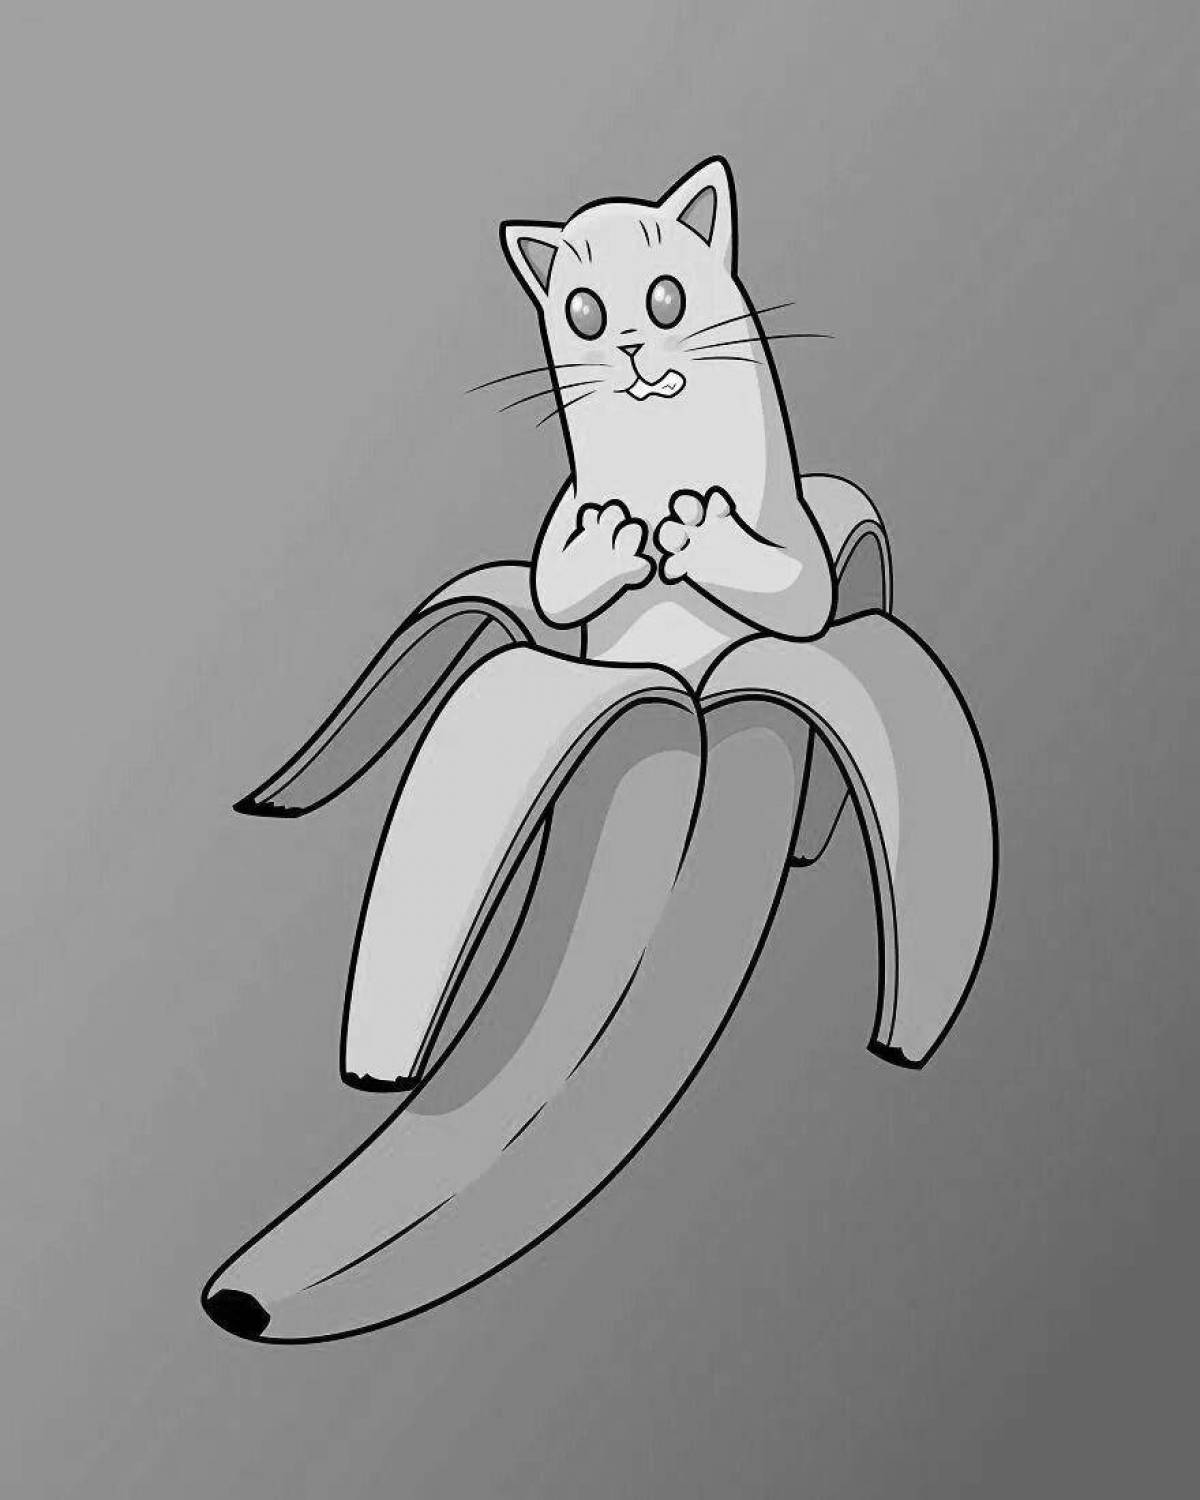 Inquisitive cat in a banana